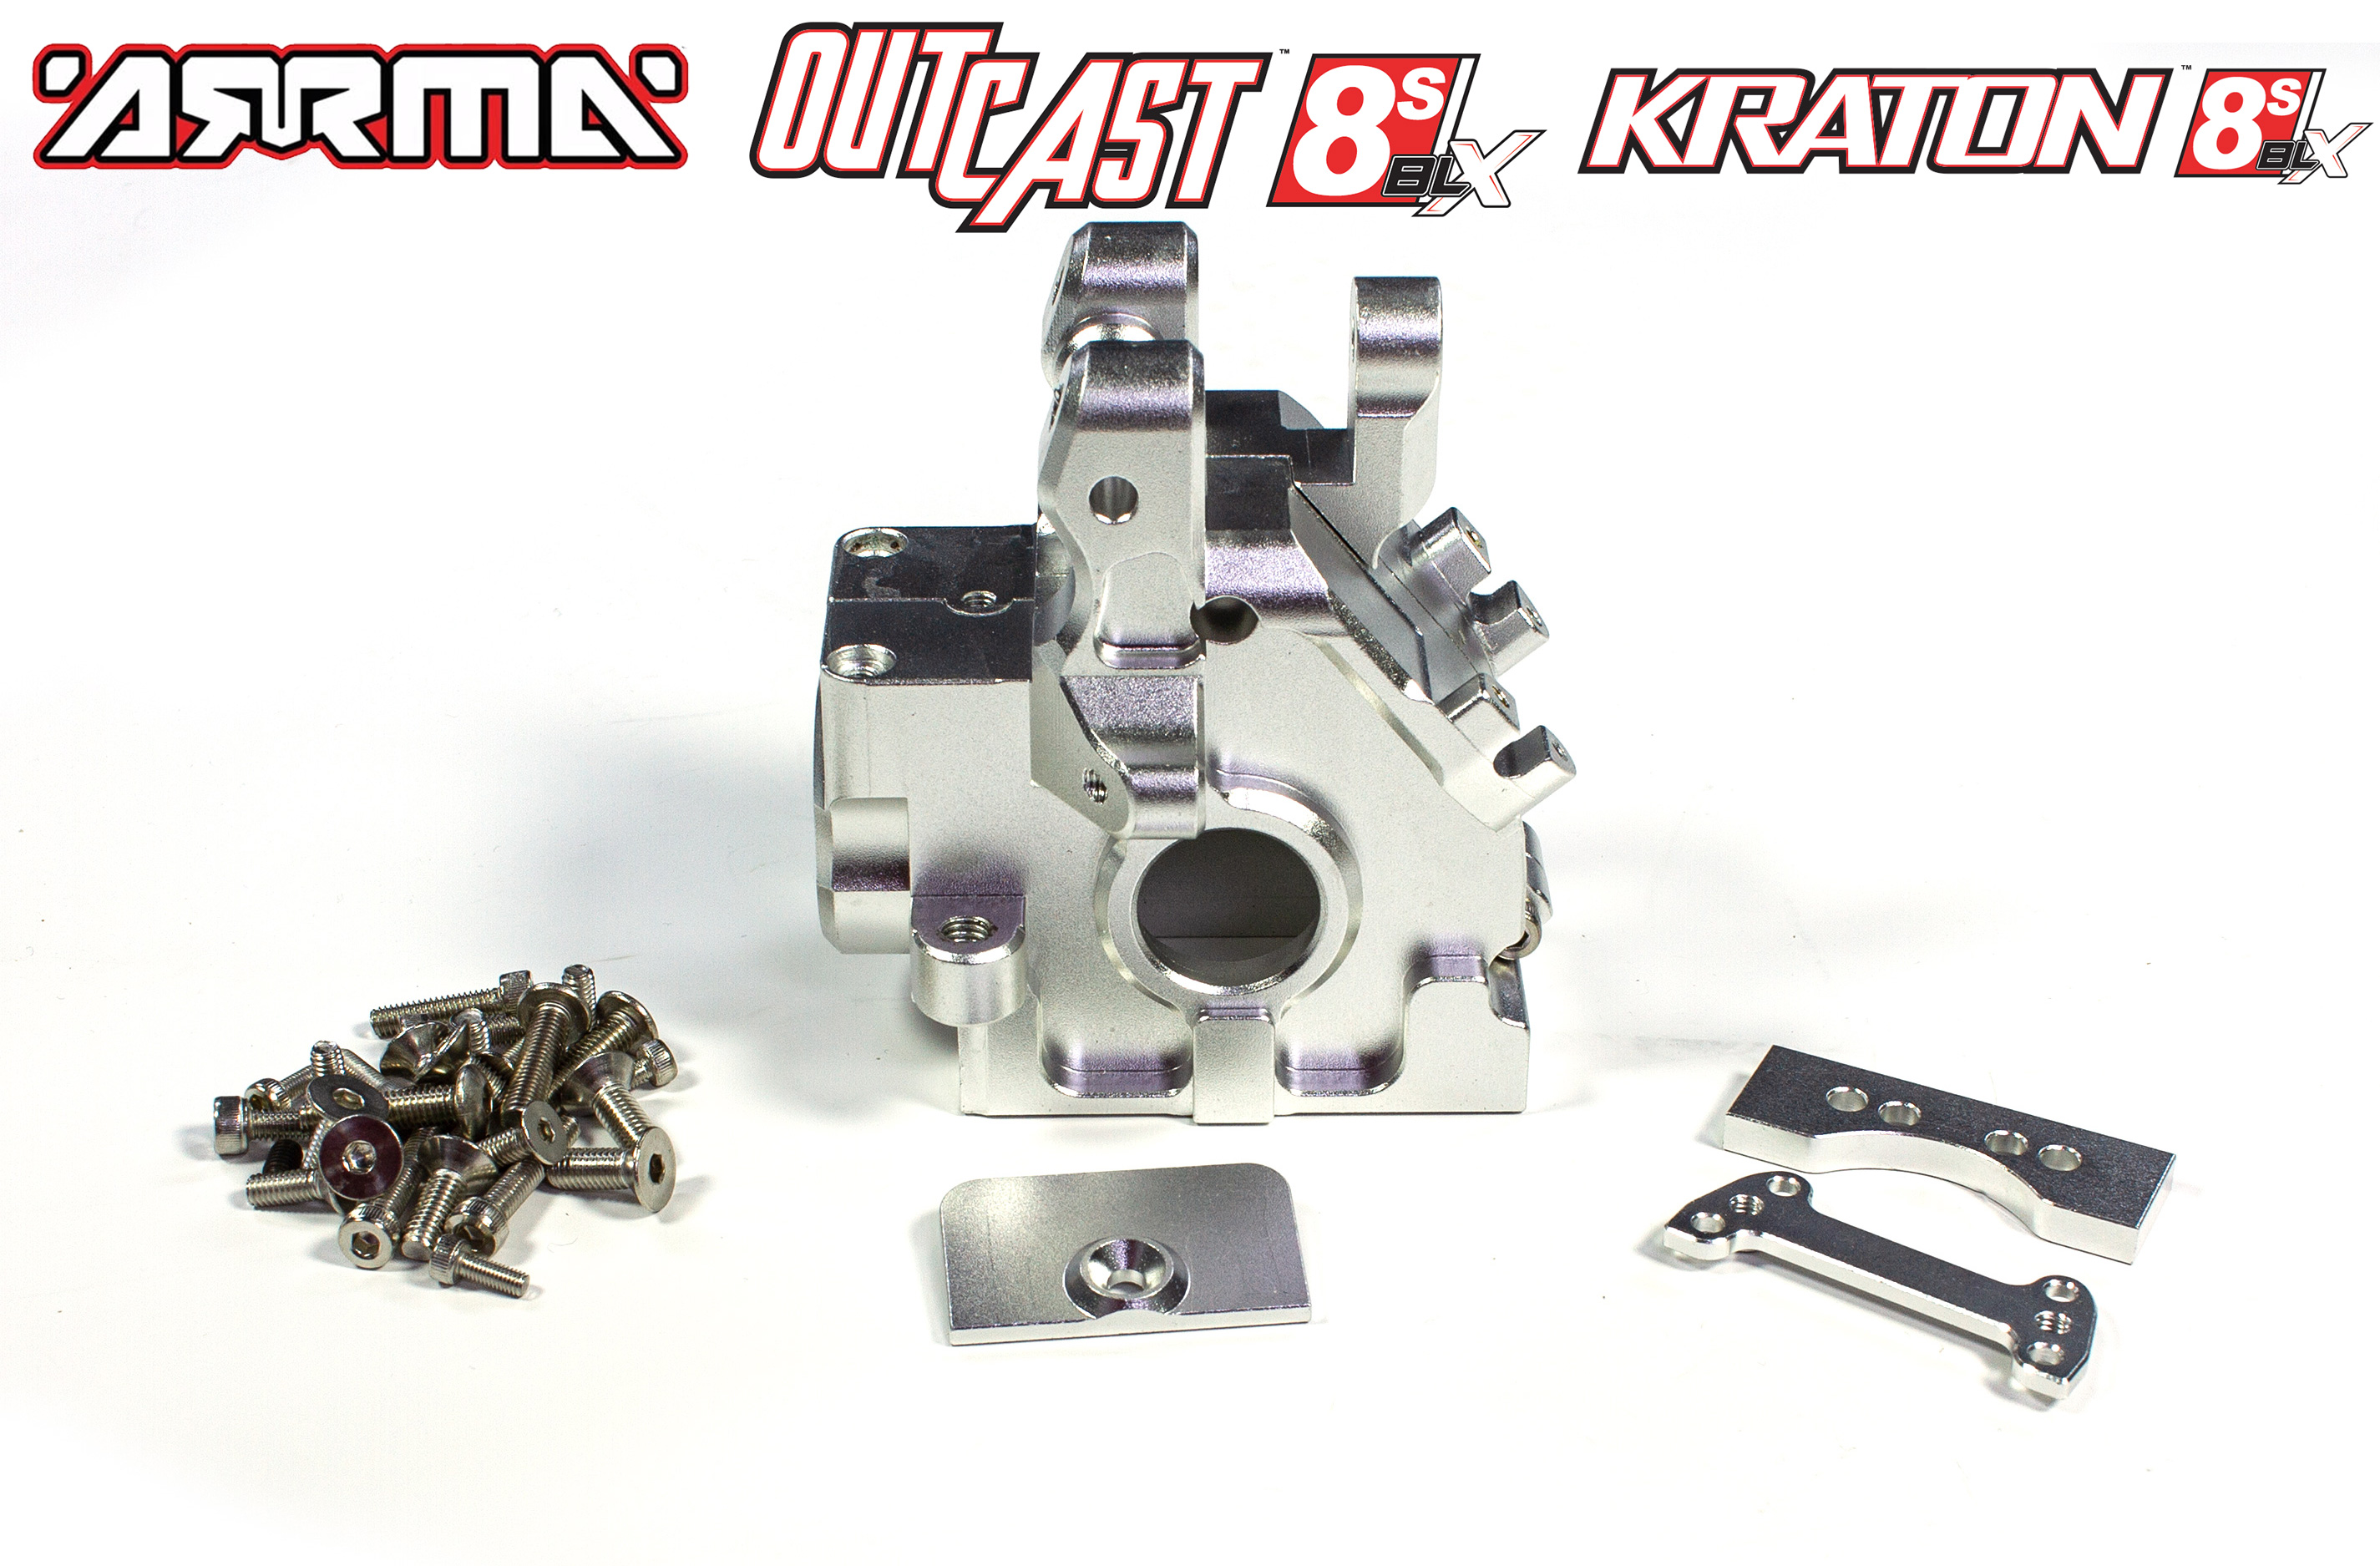 AKX013 GPM gear box f/r for Arrma Kraton / Outcast 8S